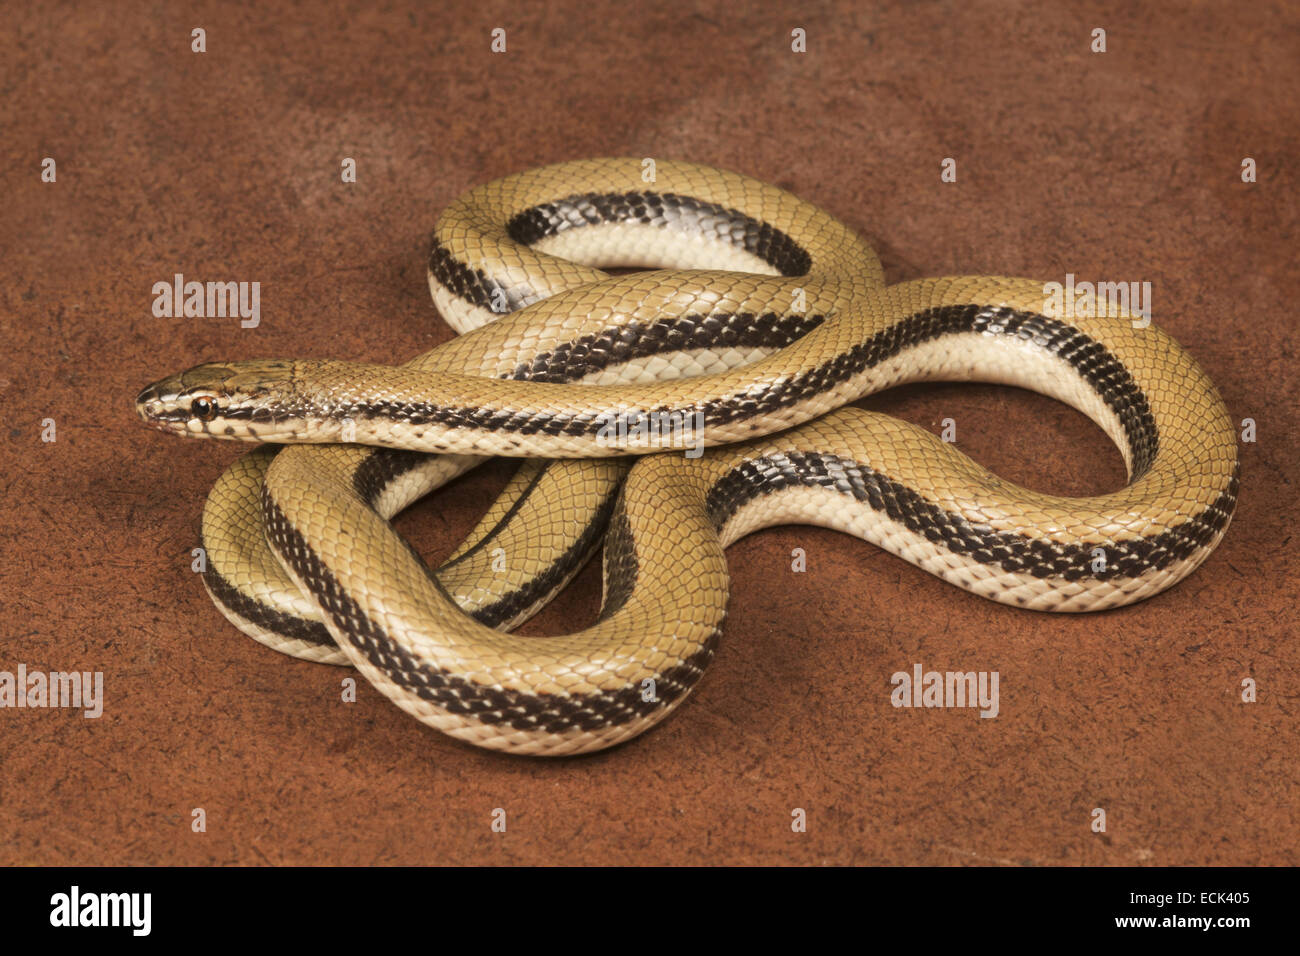 Schlingnatter Coronella SP. Familie: Colubridae, Gujarat, Indien Stockfoto